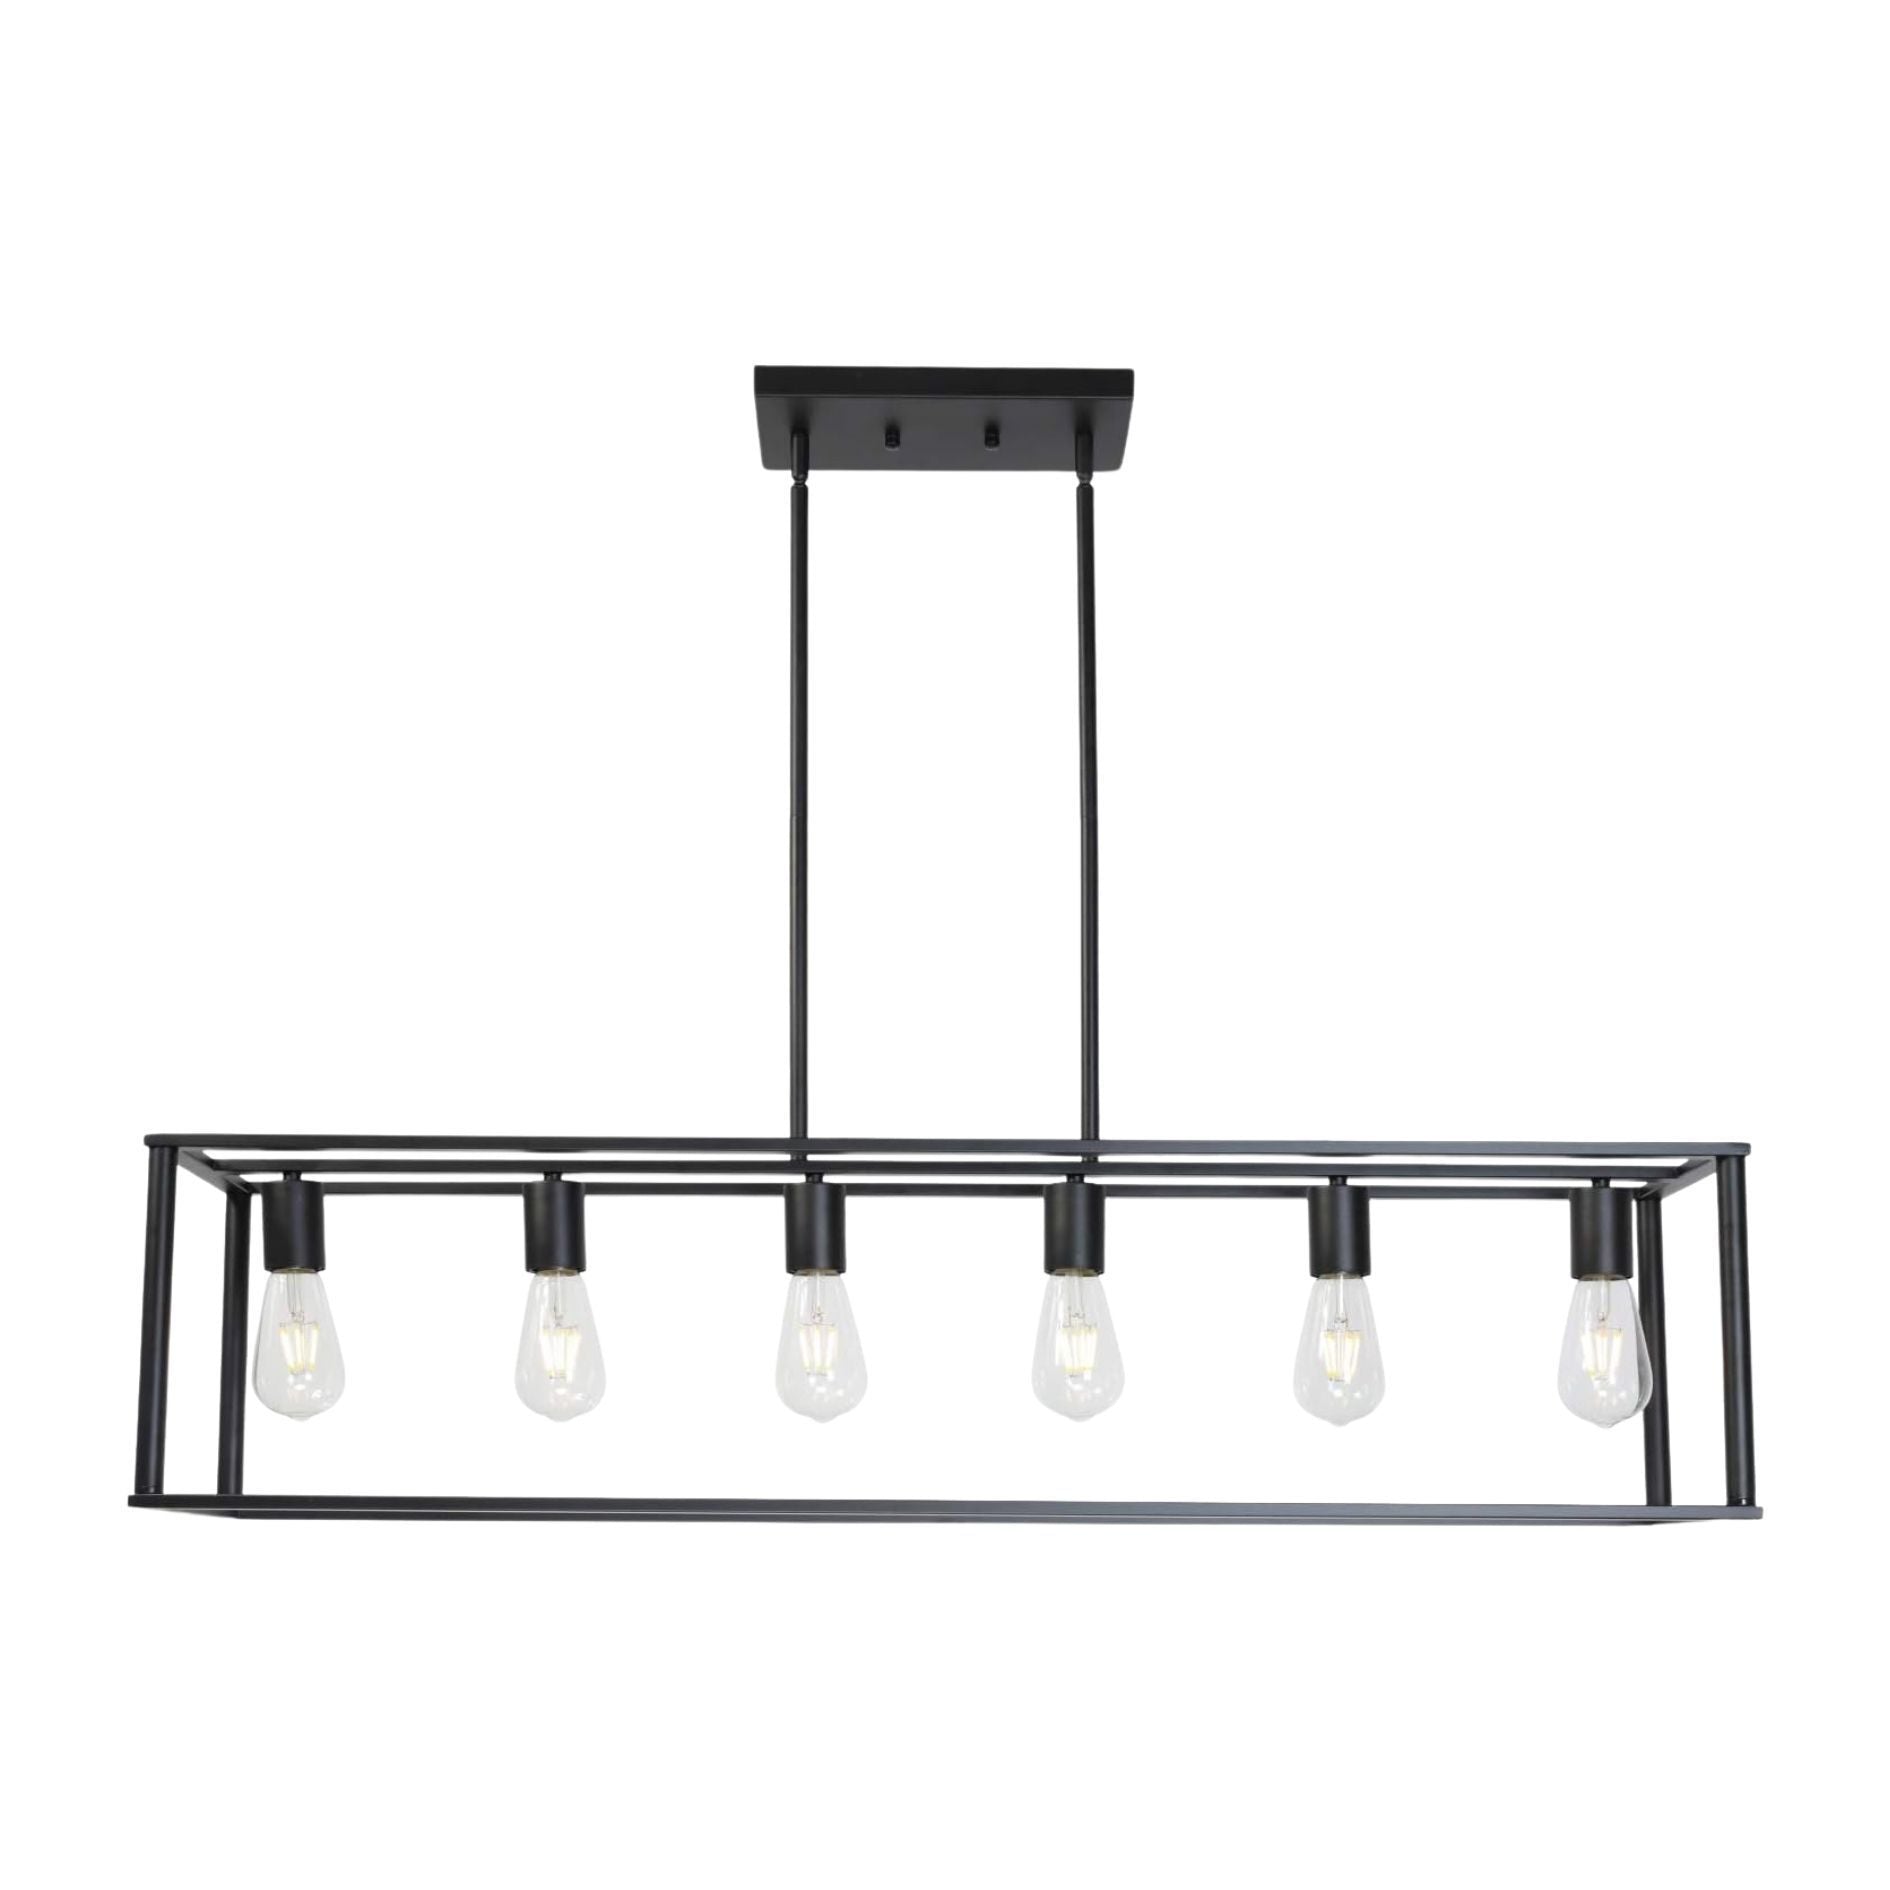 TM-HOME-6-Light-Rectangle-Contemporary-Farmhouse-Linear-Pendant-Lighting-Black-Metal-Cage-Ceiling-Light-Fixture-Lamps